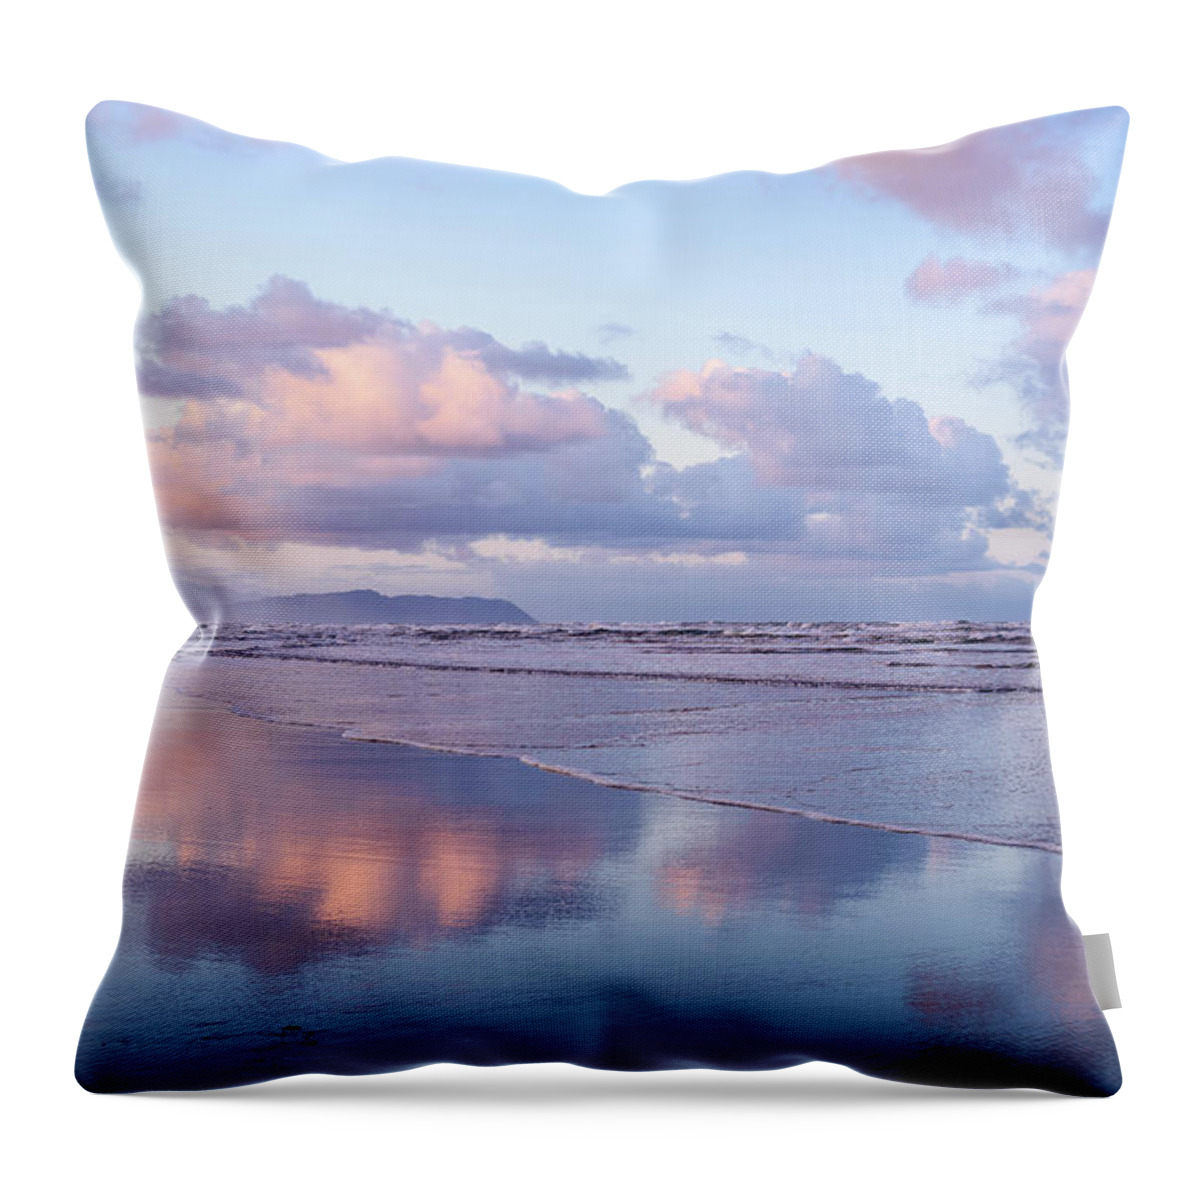 Beaches Throw Pillow featuring the photograph Morning Beach by Robert Potts